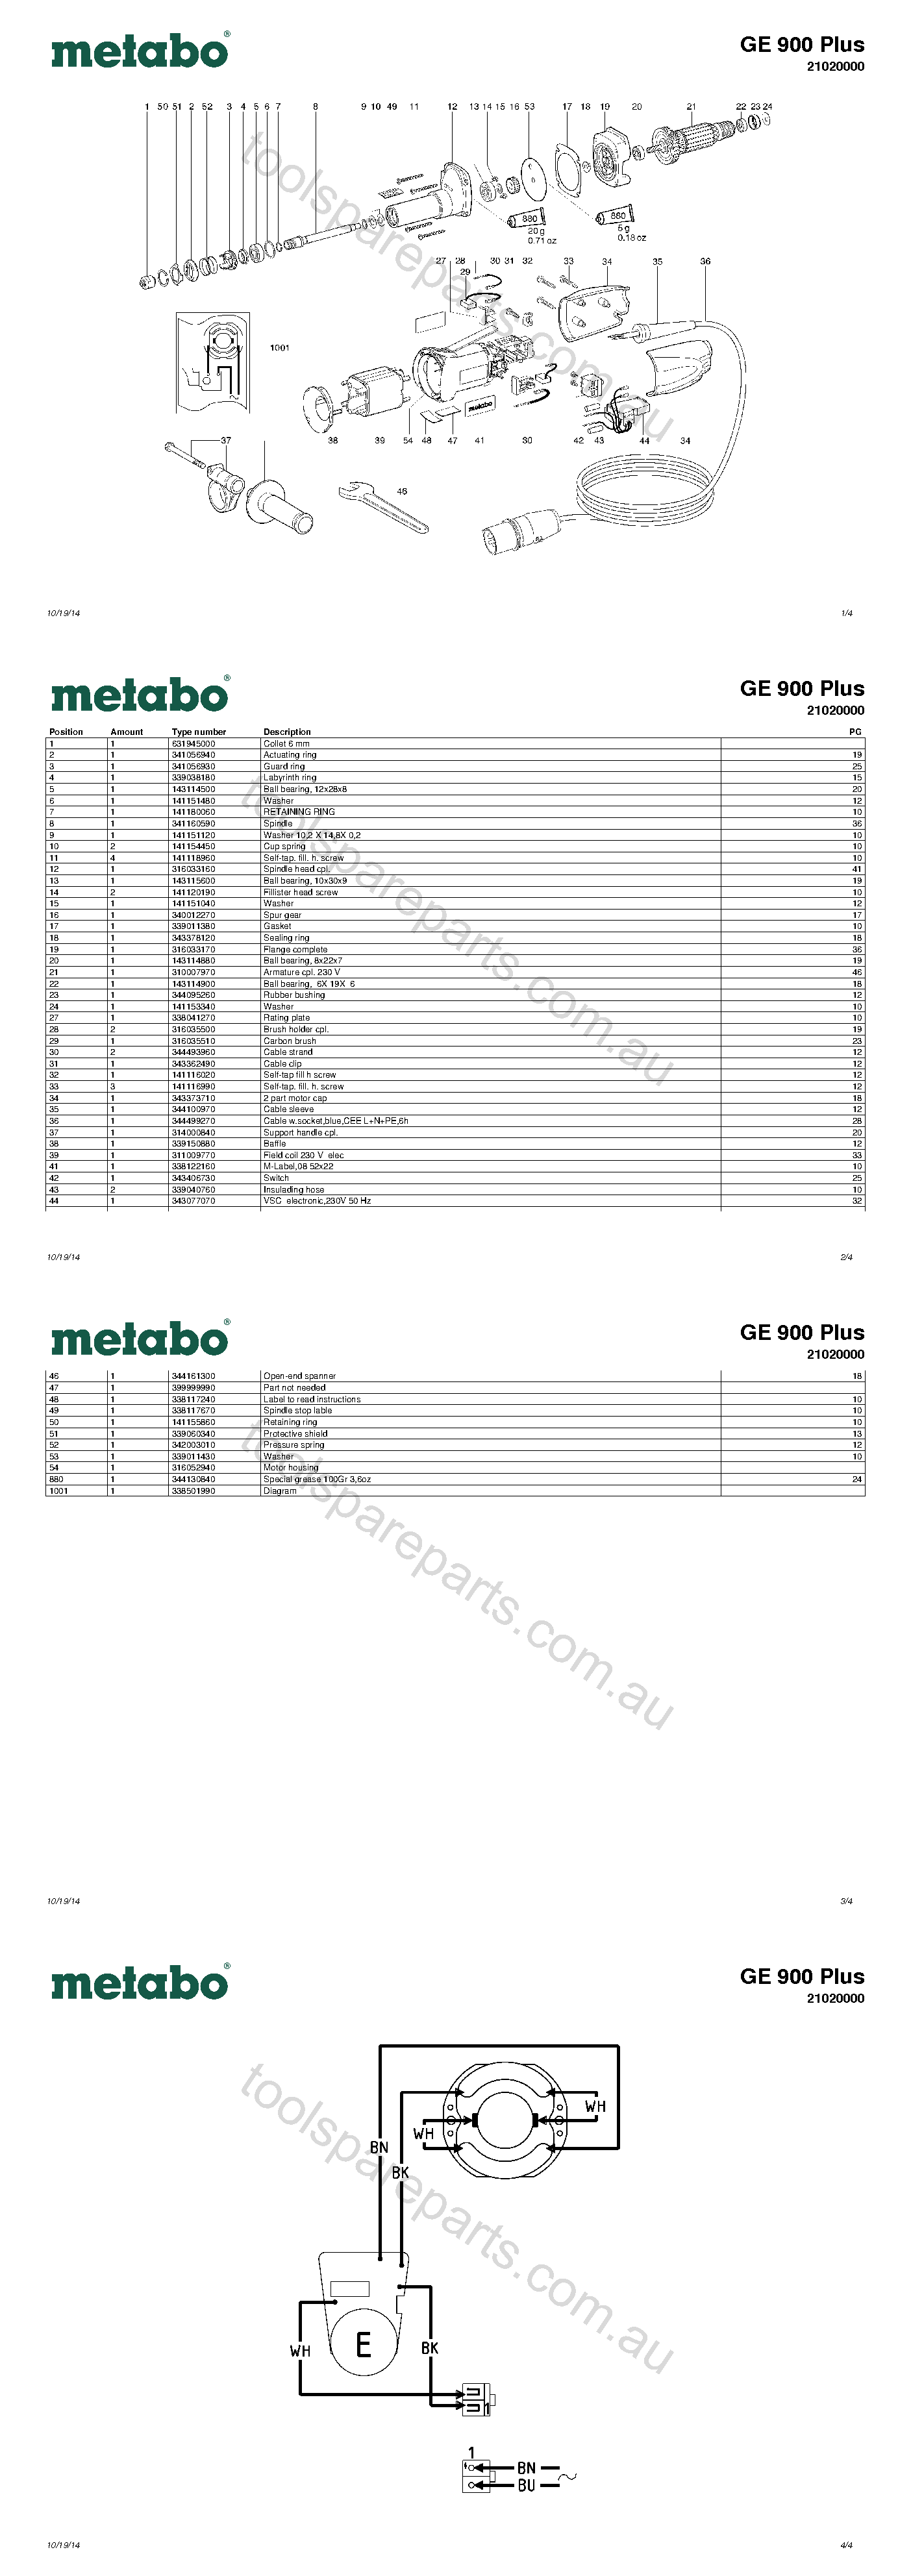 Metabo GE 900 Plus 21020000  Diagram 1